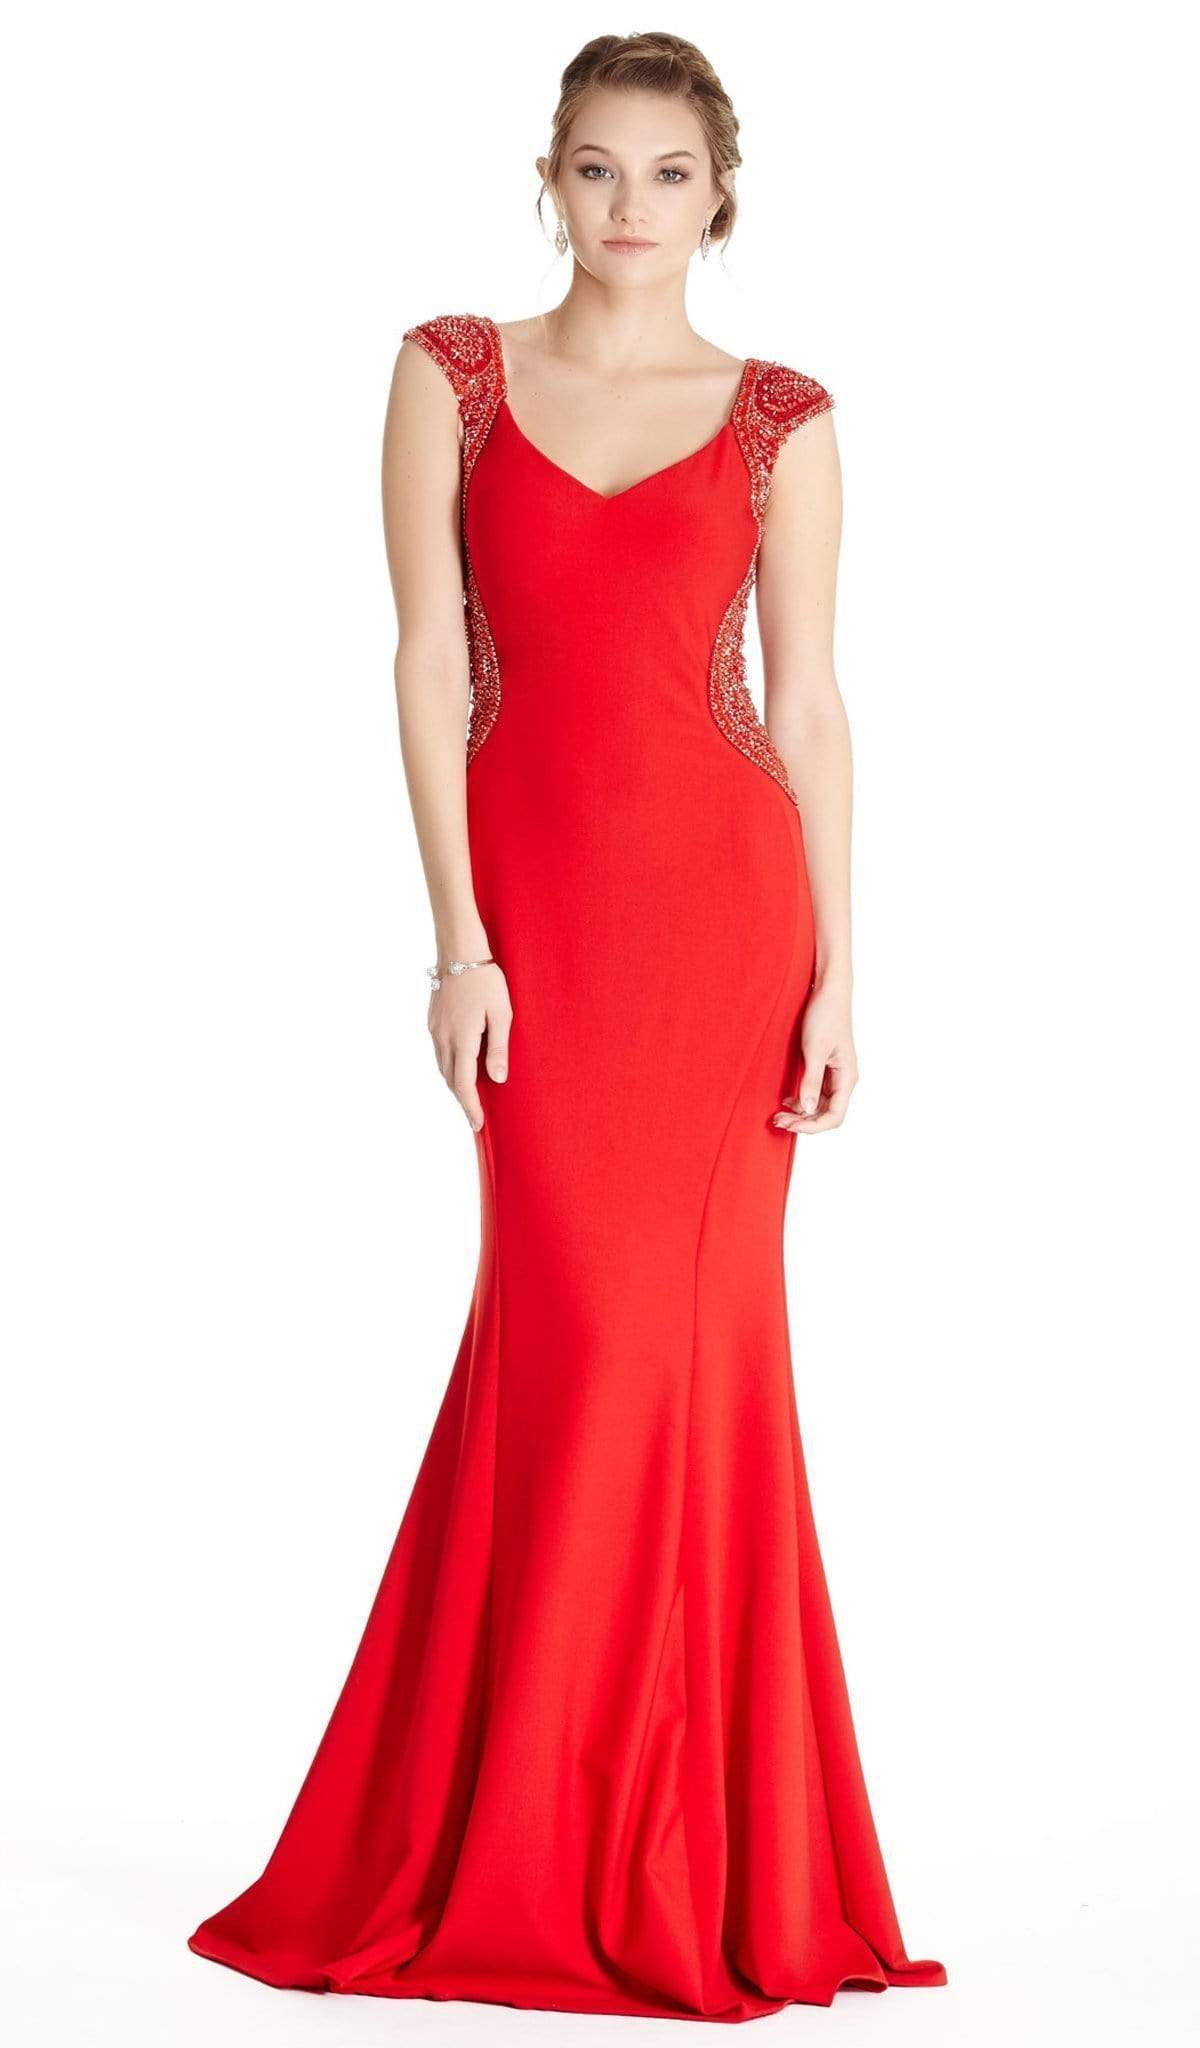 Image of Aspeed Design - Embellished Cap Sleeve Prom Dress